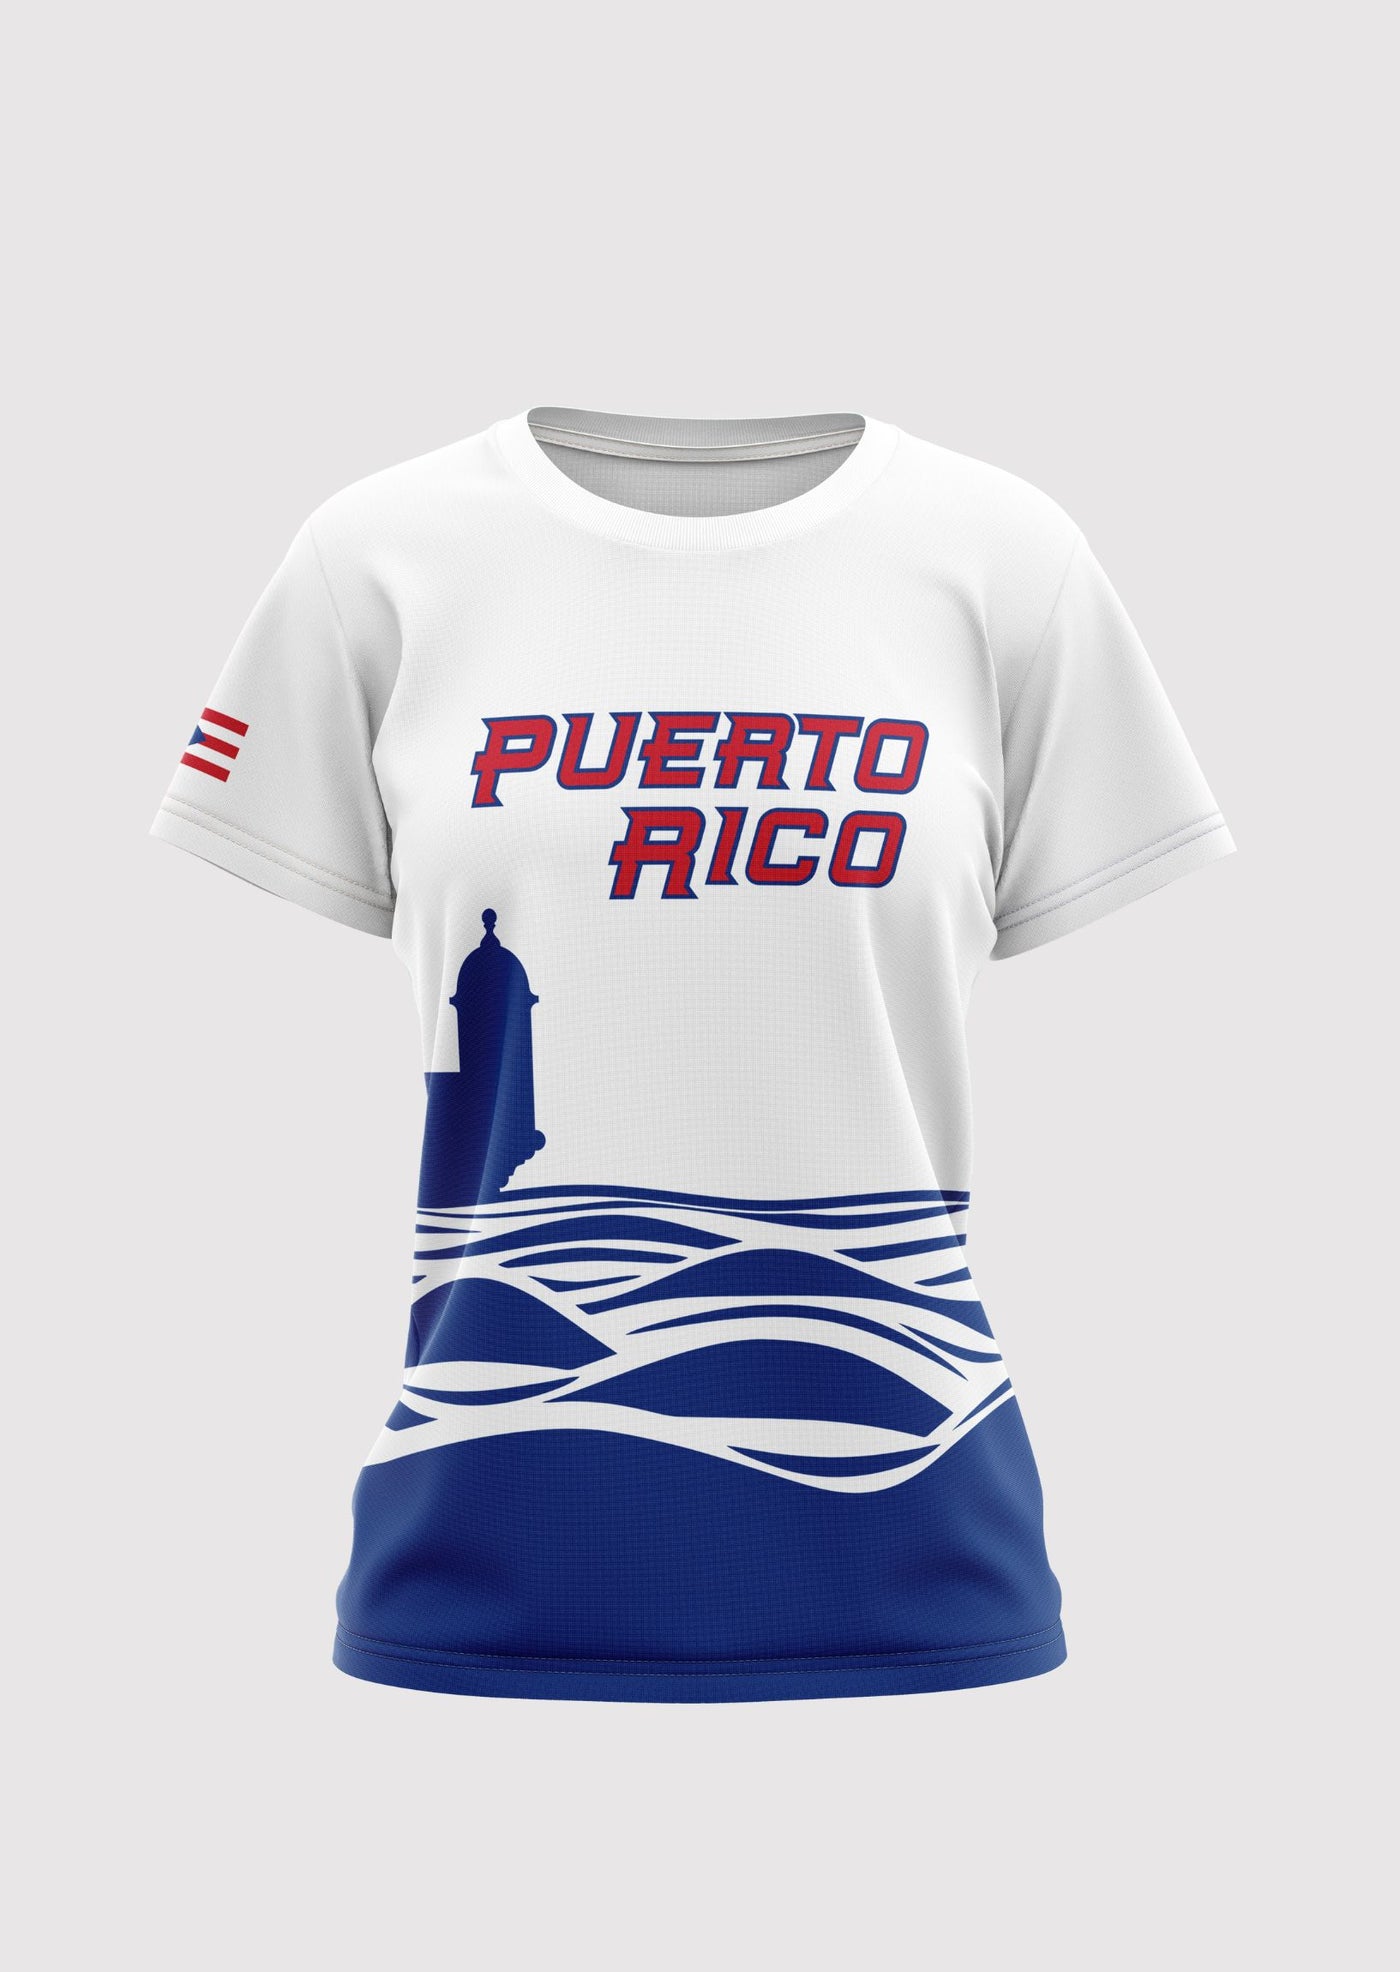 Puerto Rico Baseball Woman's T-Shirt